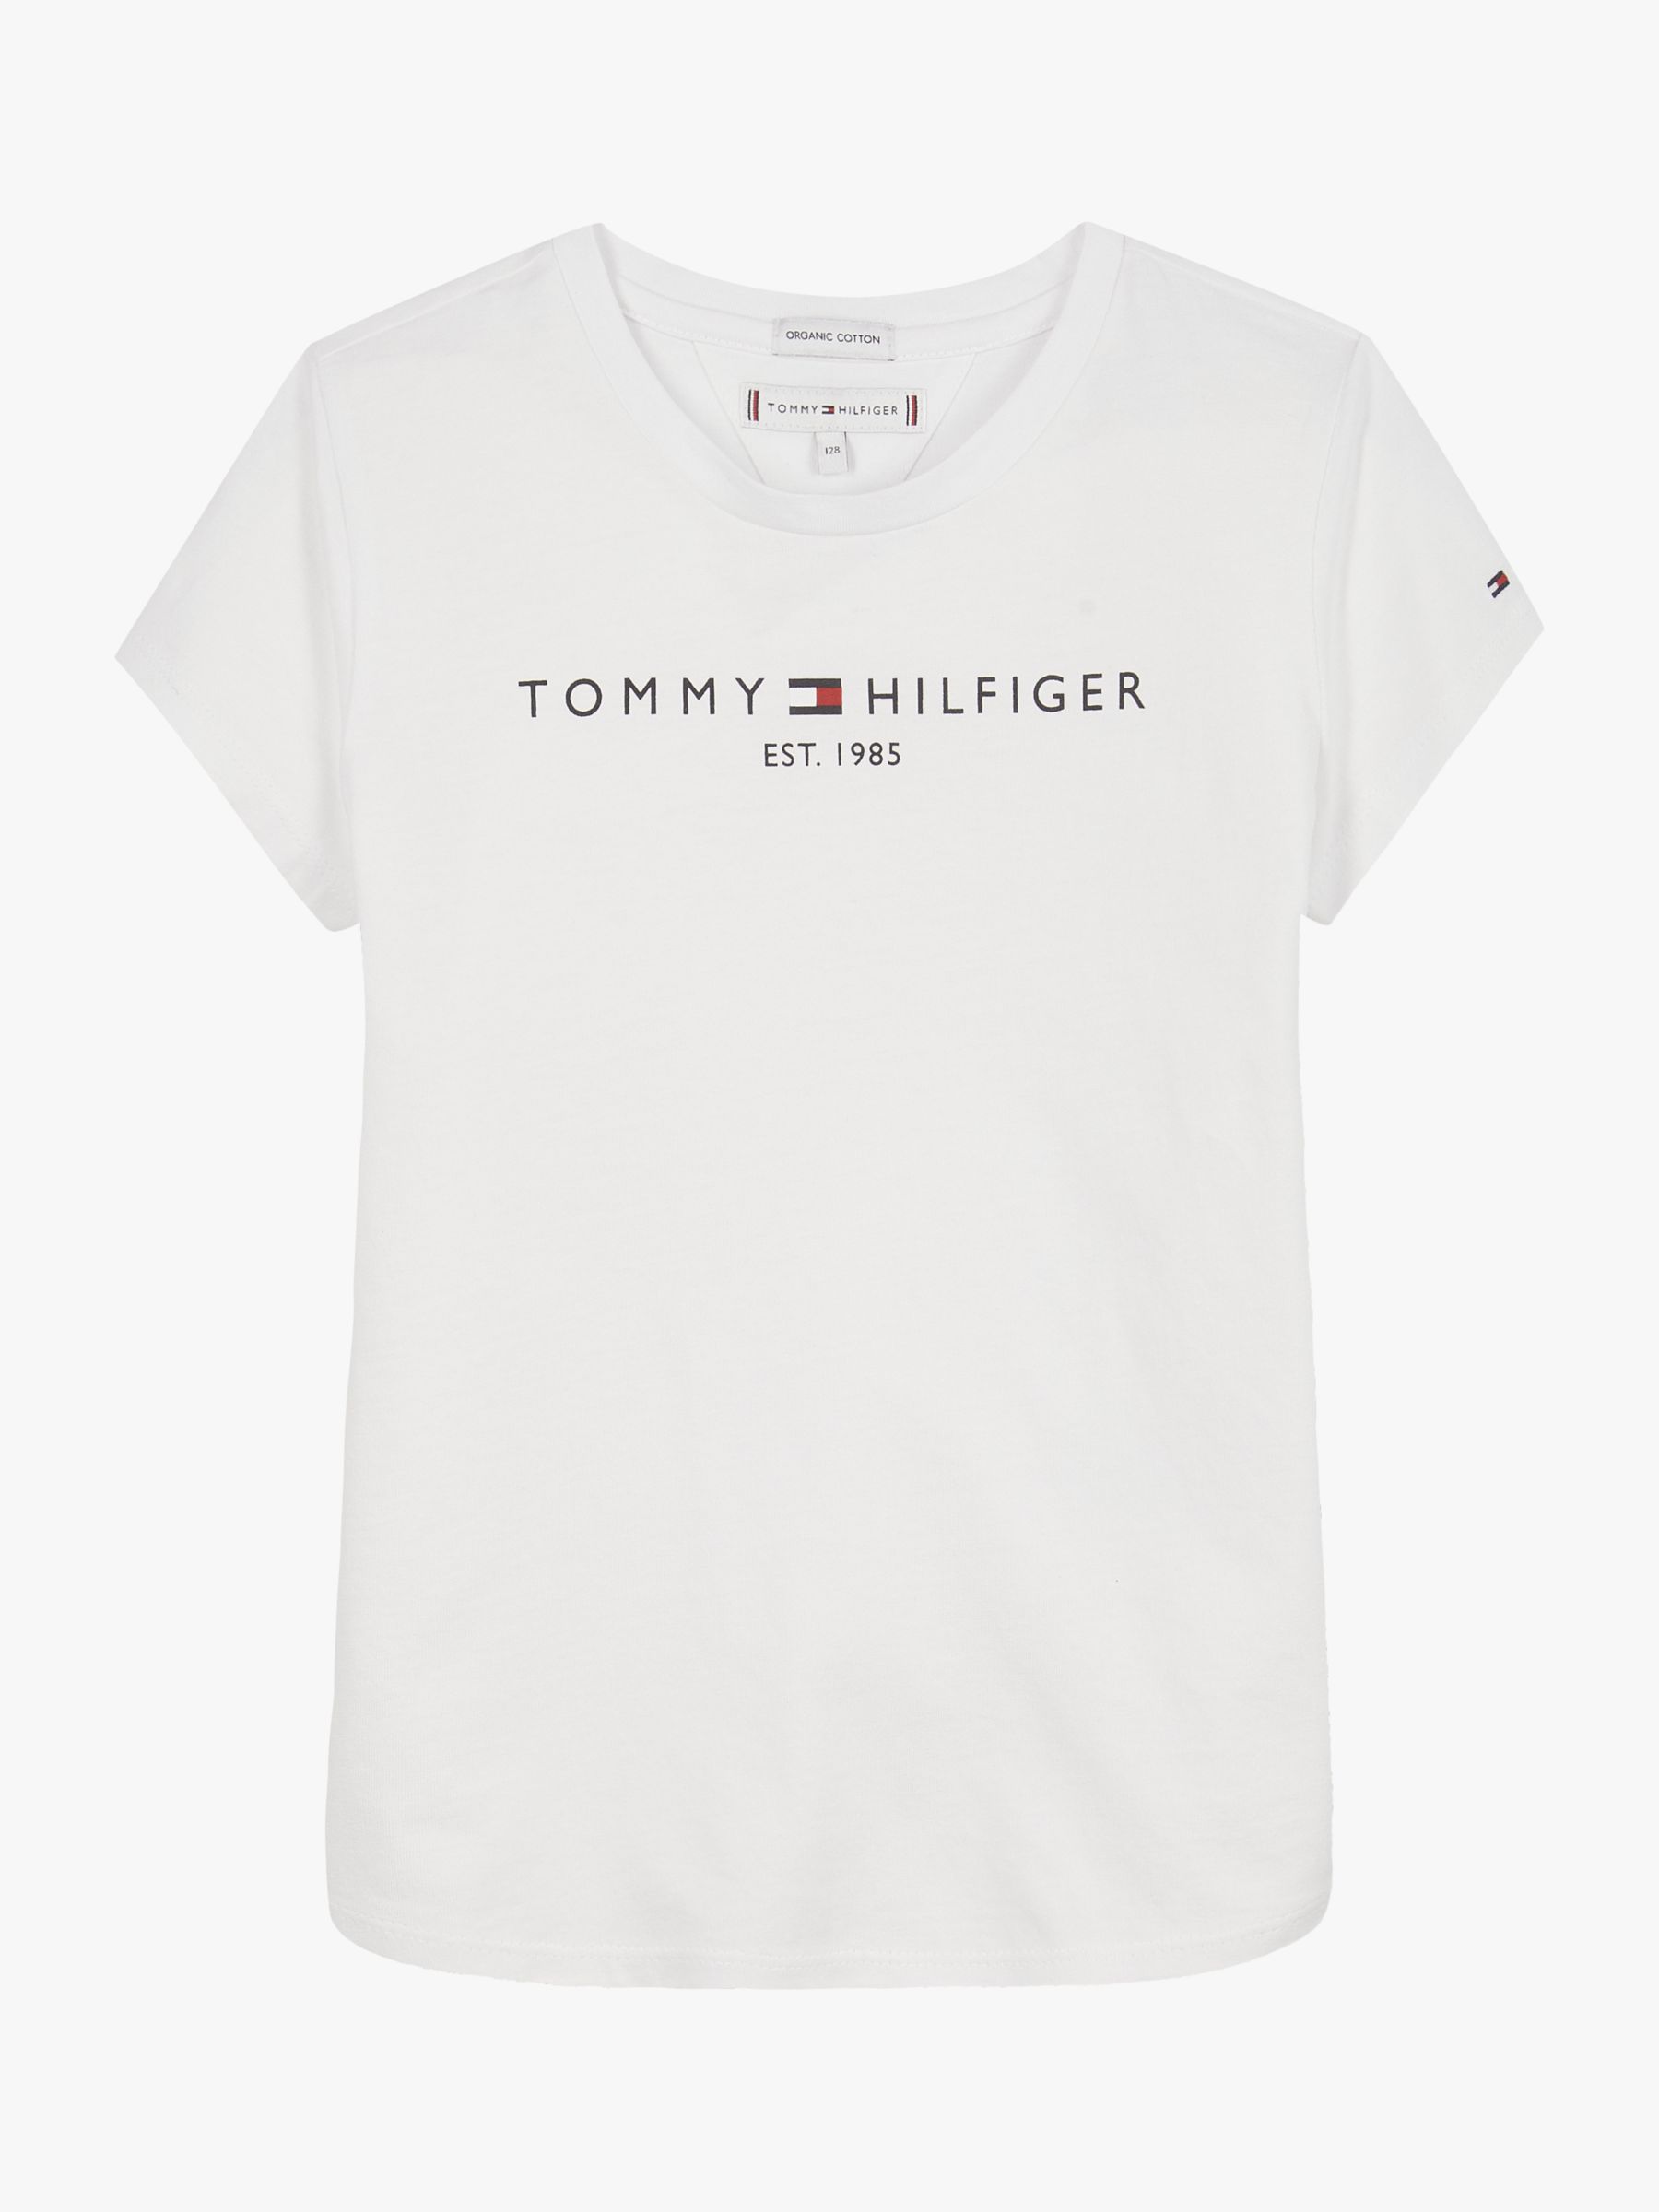 tommy hilfiger tshirt white